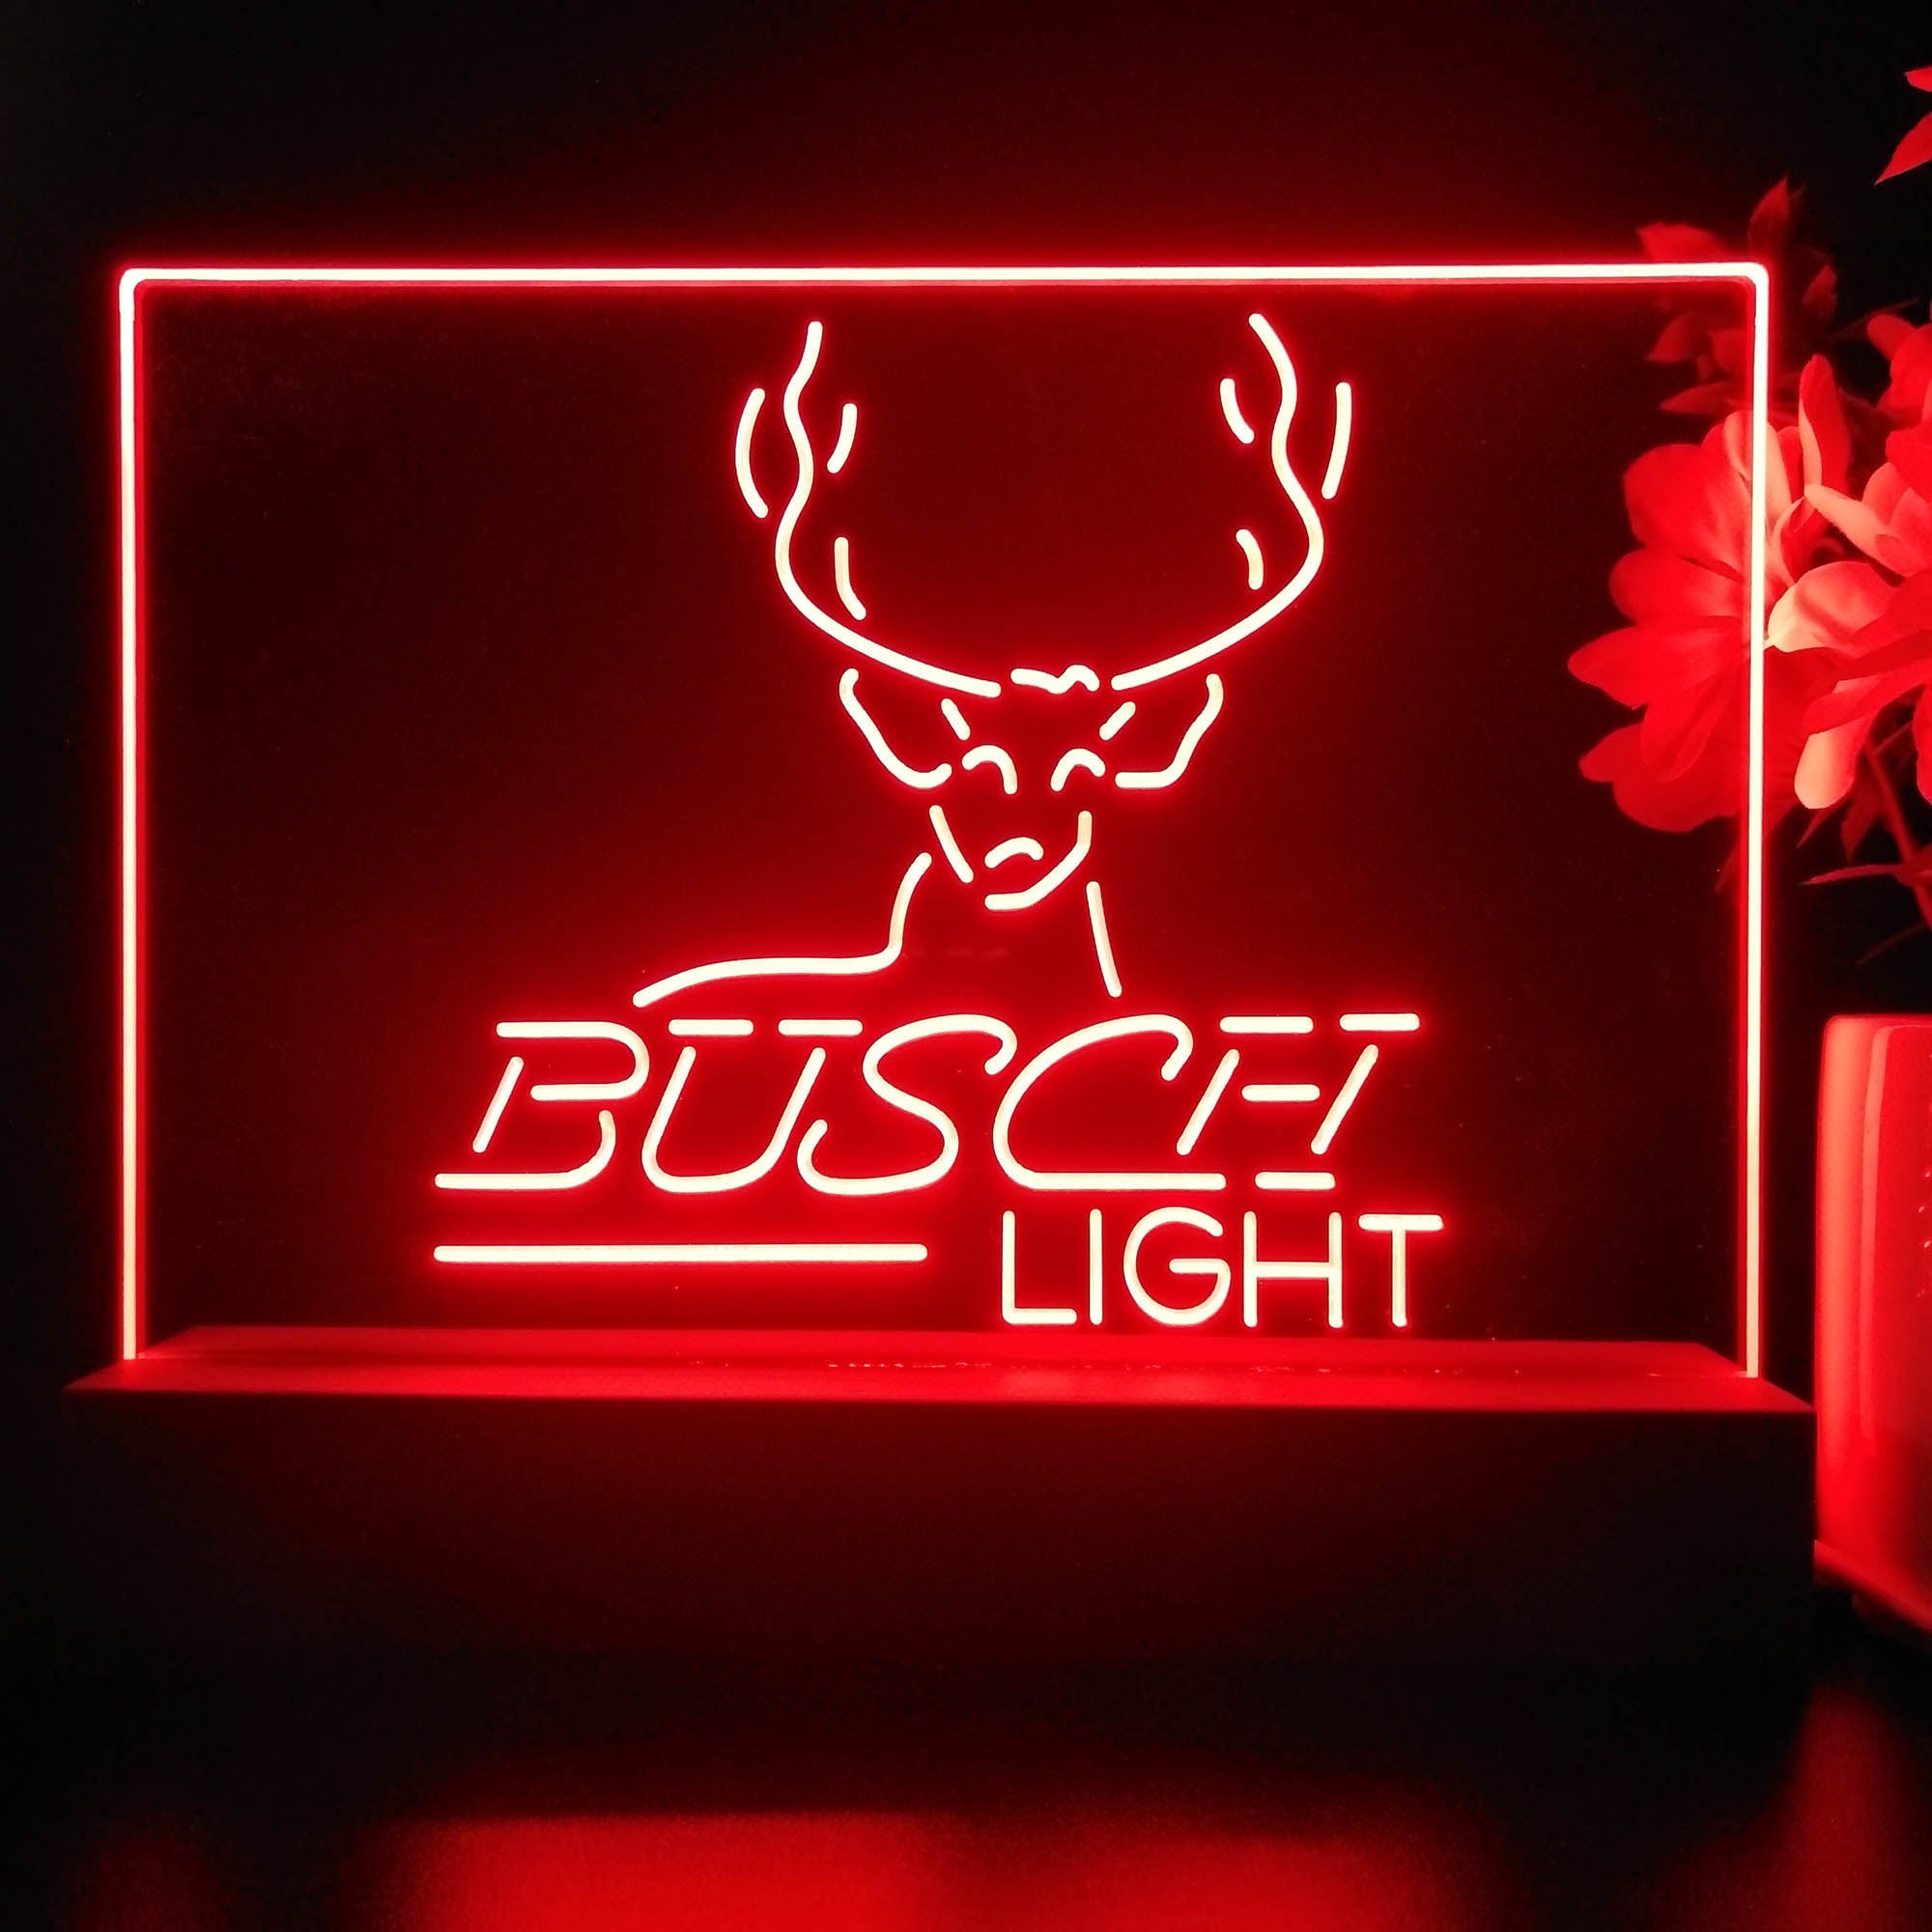 Buschs Deer Hunting Beer Light Neon Sign Pub Bar Lamp